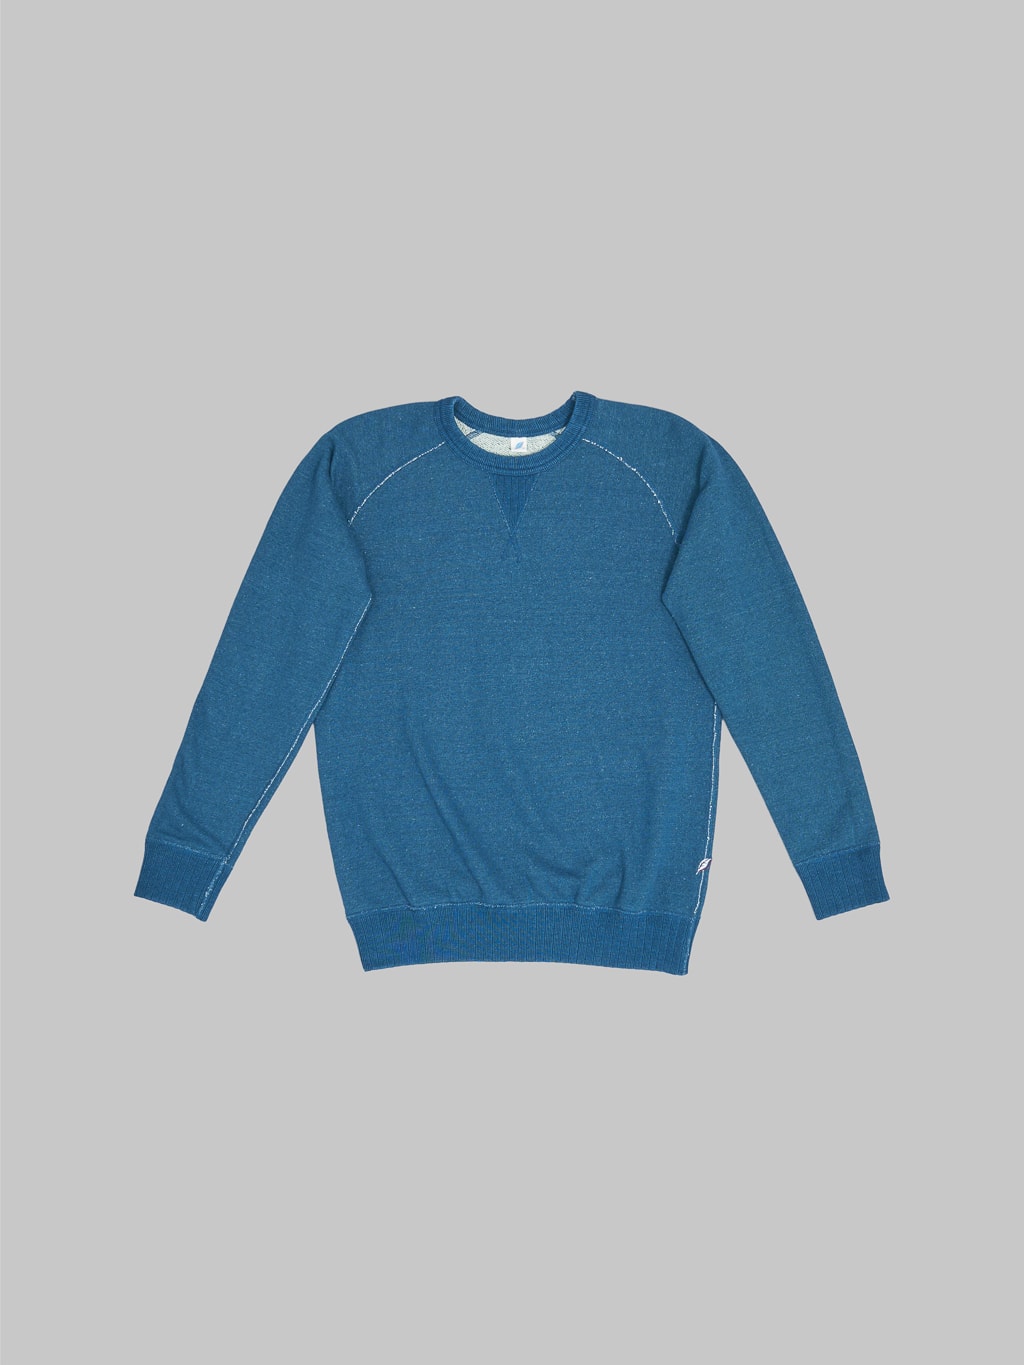 Pure Blue Japan Slub Yarn Sweatshirt Greencast Indigo front